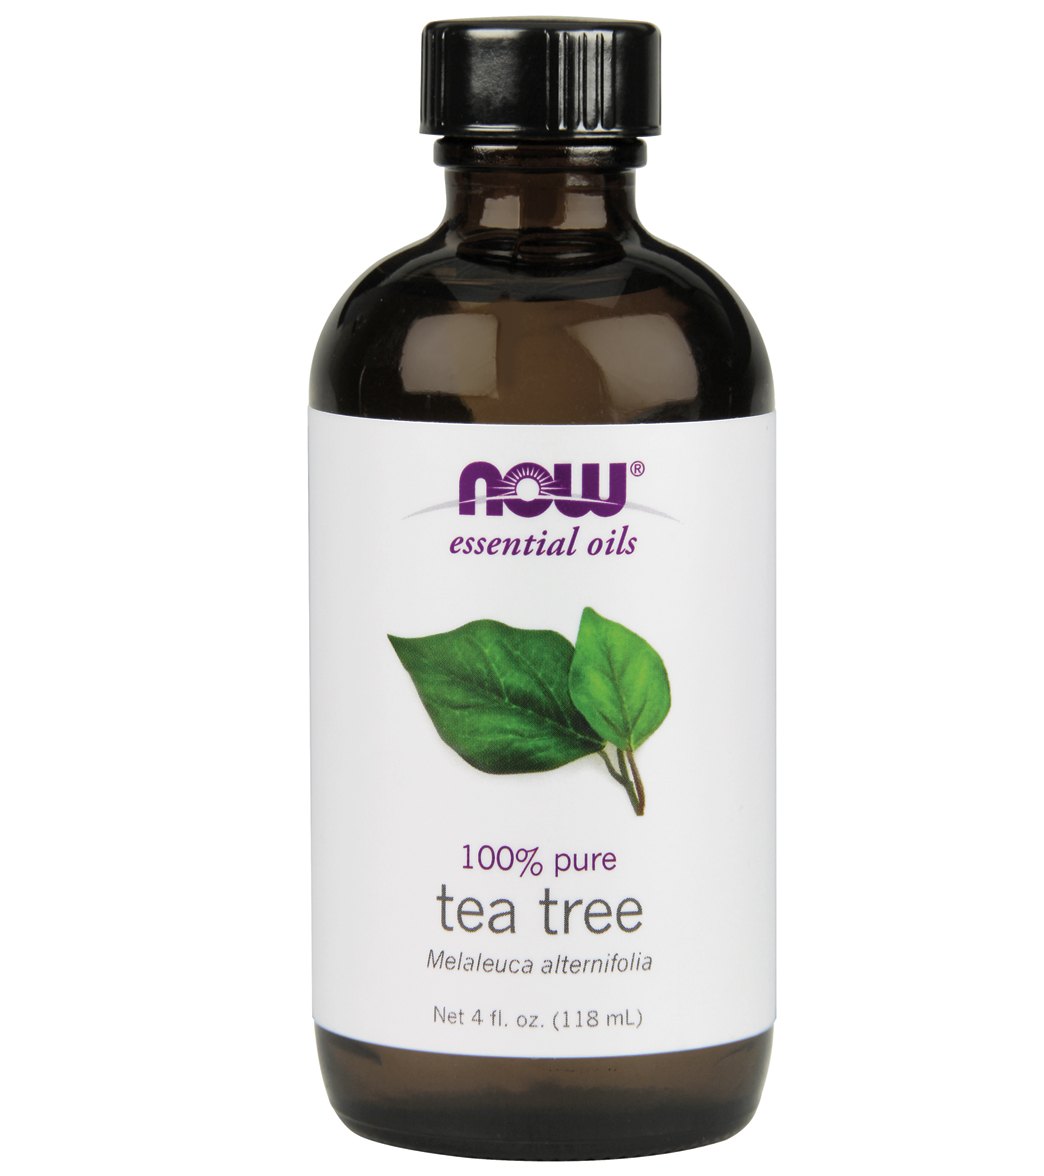 NOW Tea Tree Oil, Shop for Tea Tree Oil